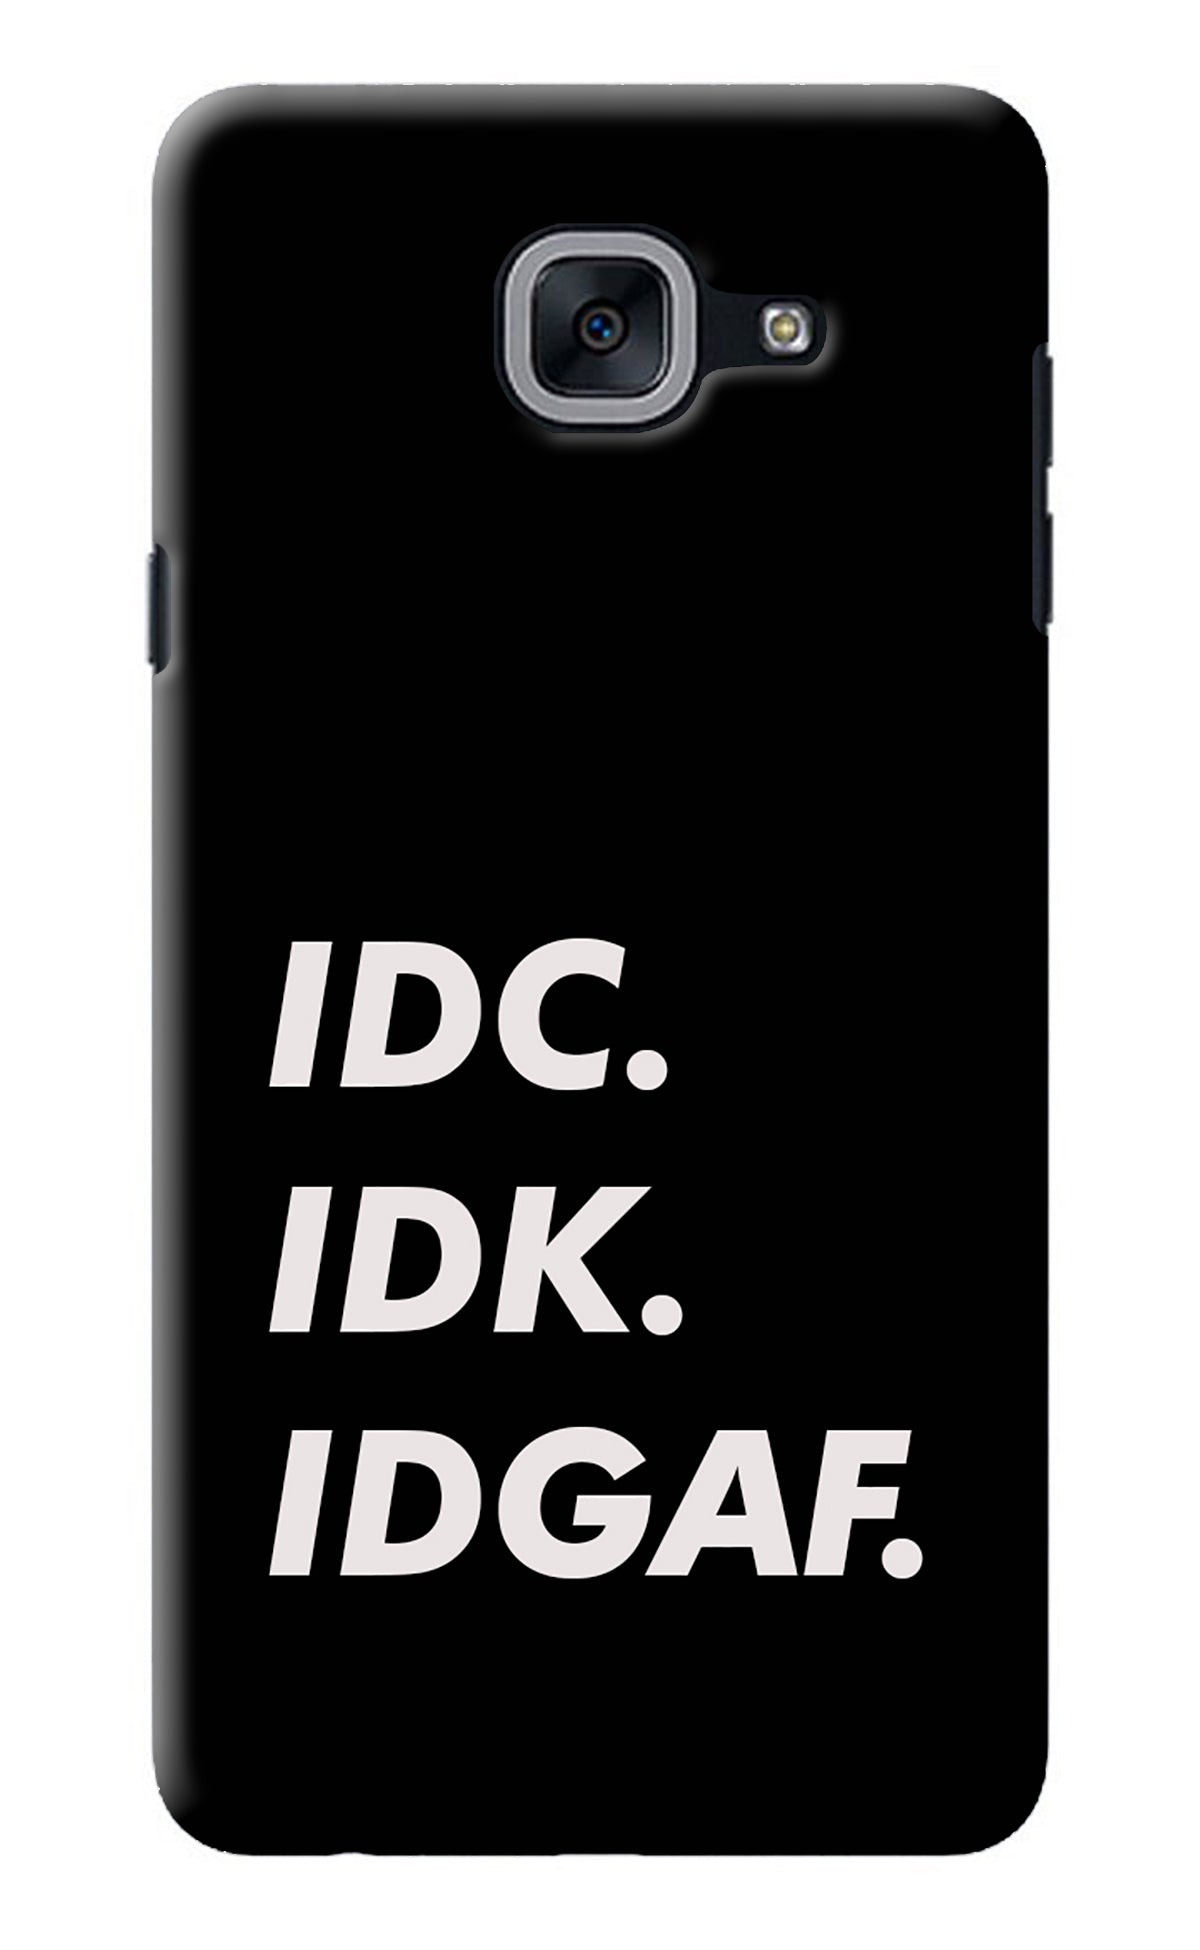 Idc Idk Idgaf Samsung J7 Max Back Cover